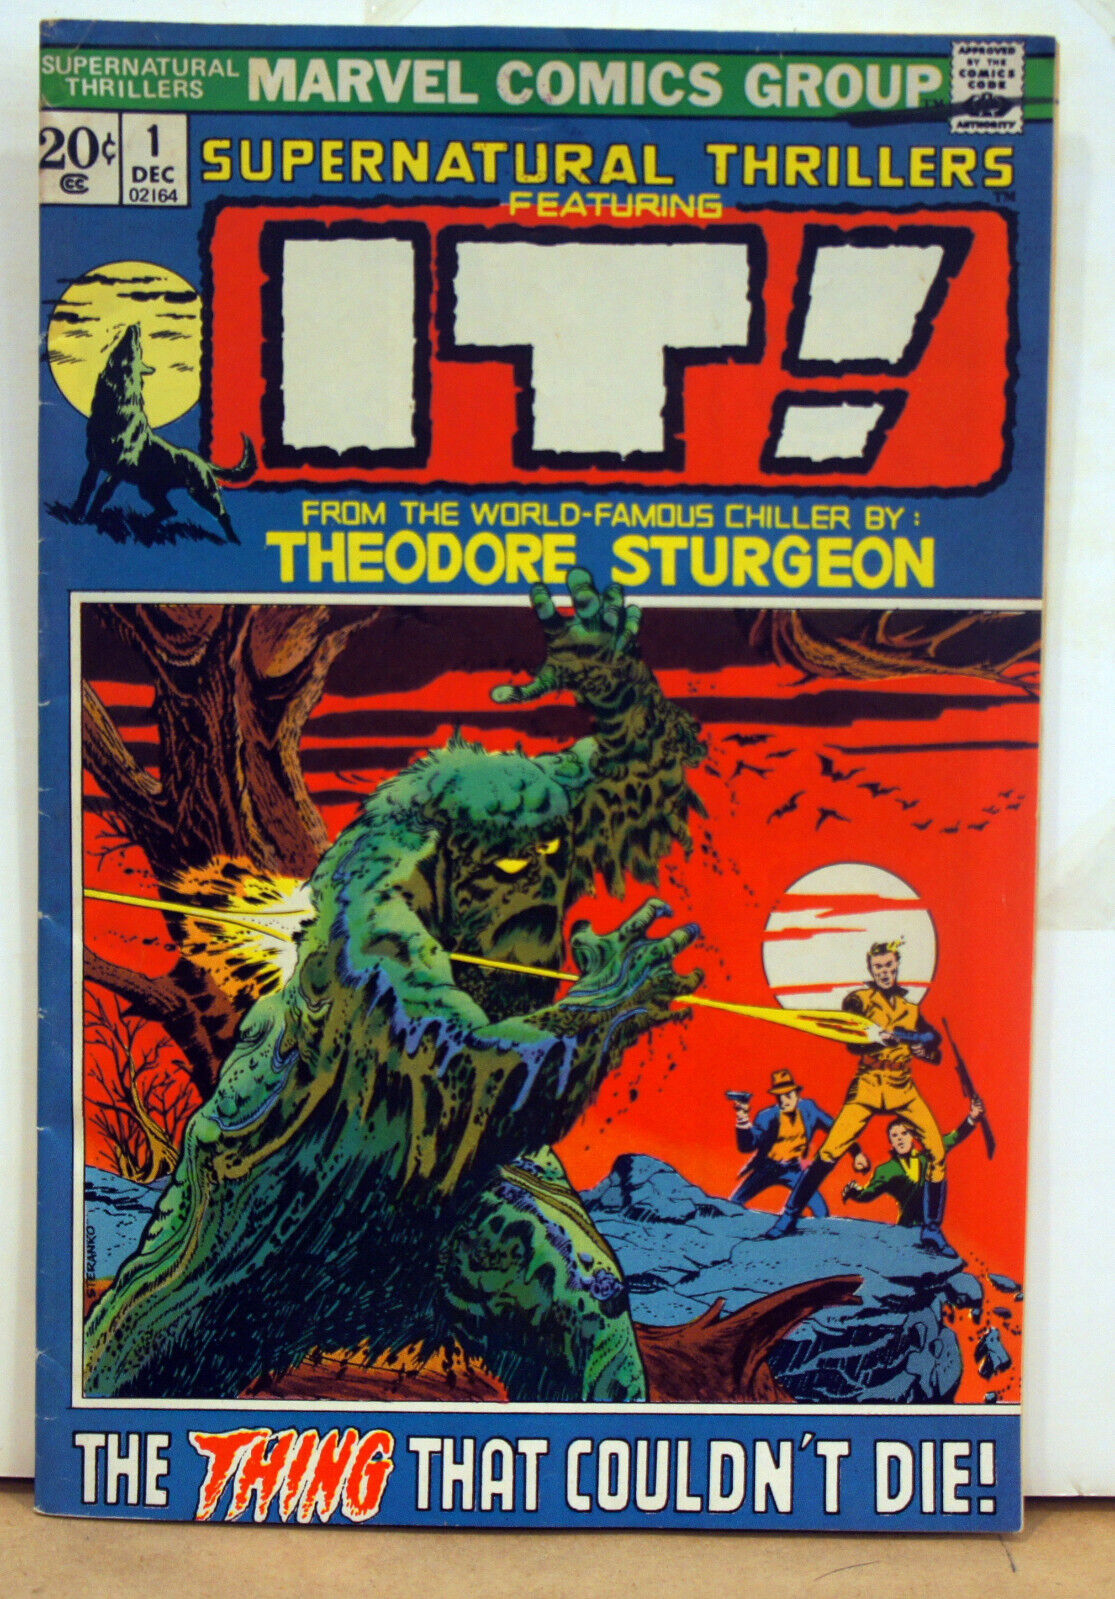 SUPERNATURAL THRILLERS #1 (1972) COVER JIM STERANKO INTERIOR ART MARIE SEVERIN